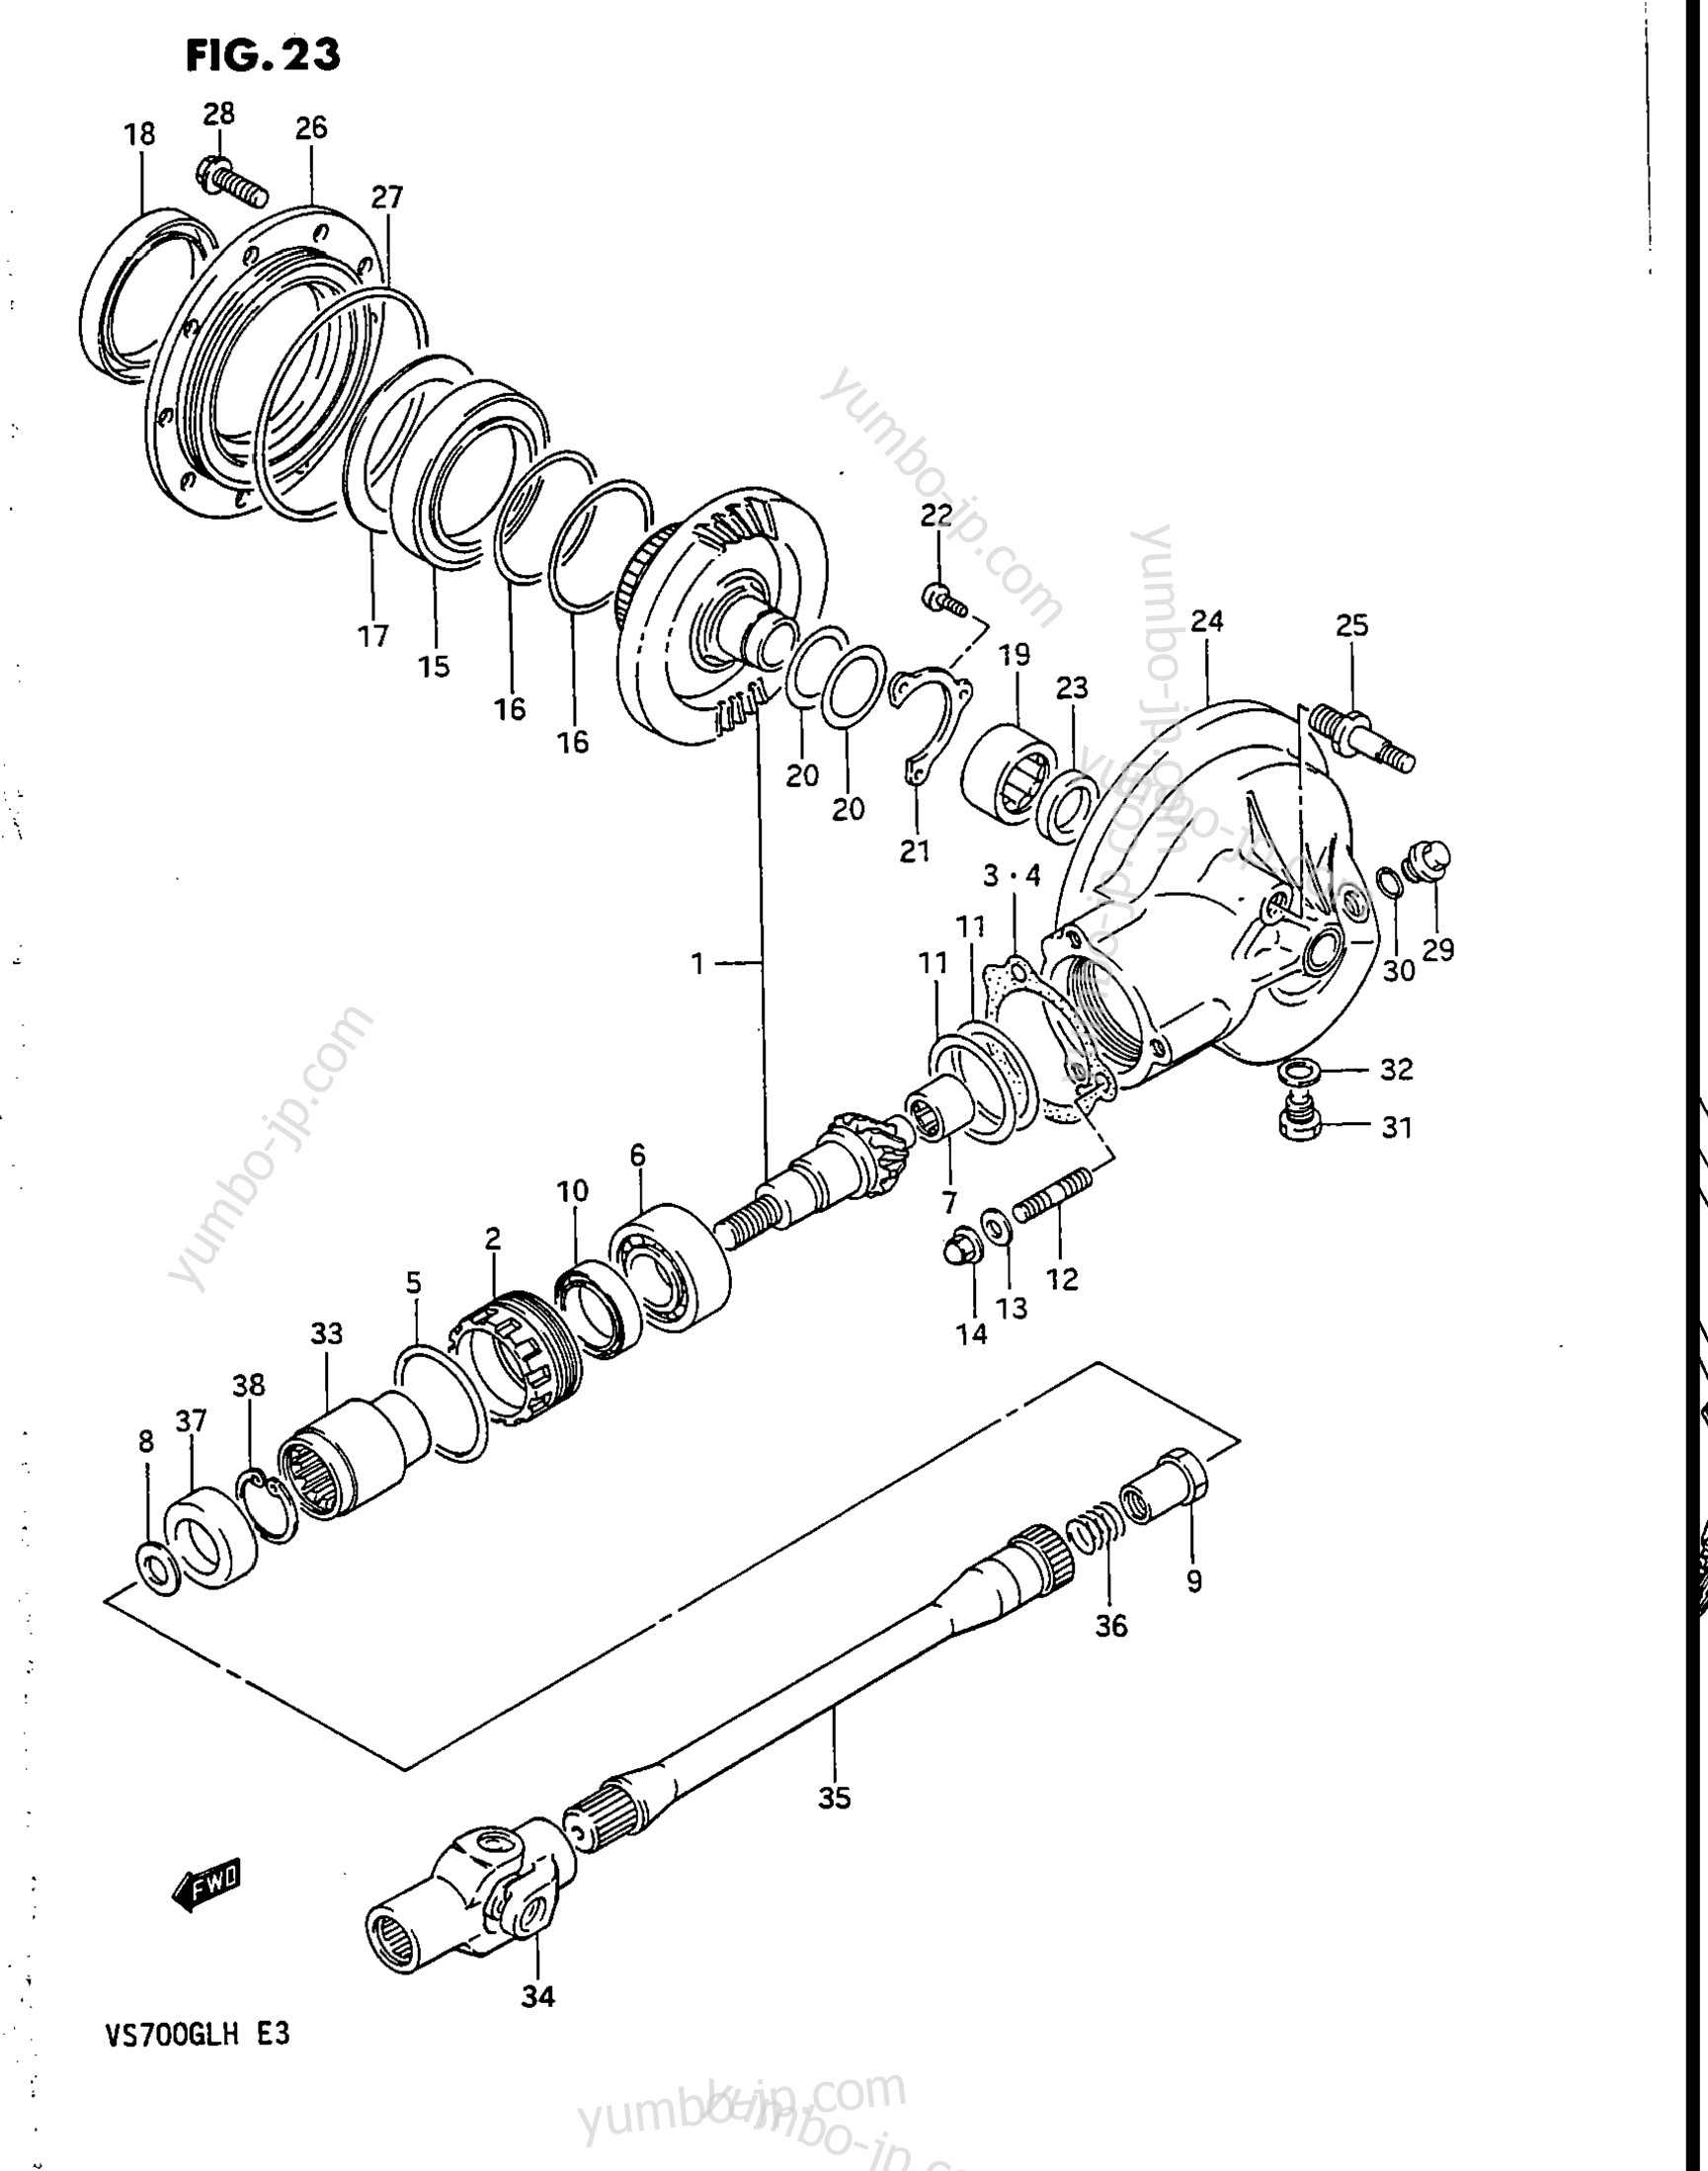 PROPELLER SHAFT - FINAL DRIVE GEAR for motorcycles SUZUKI Intruder (VS700GLF) 1987 year